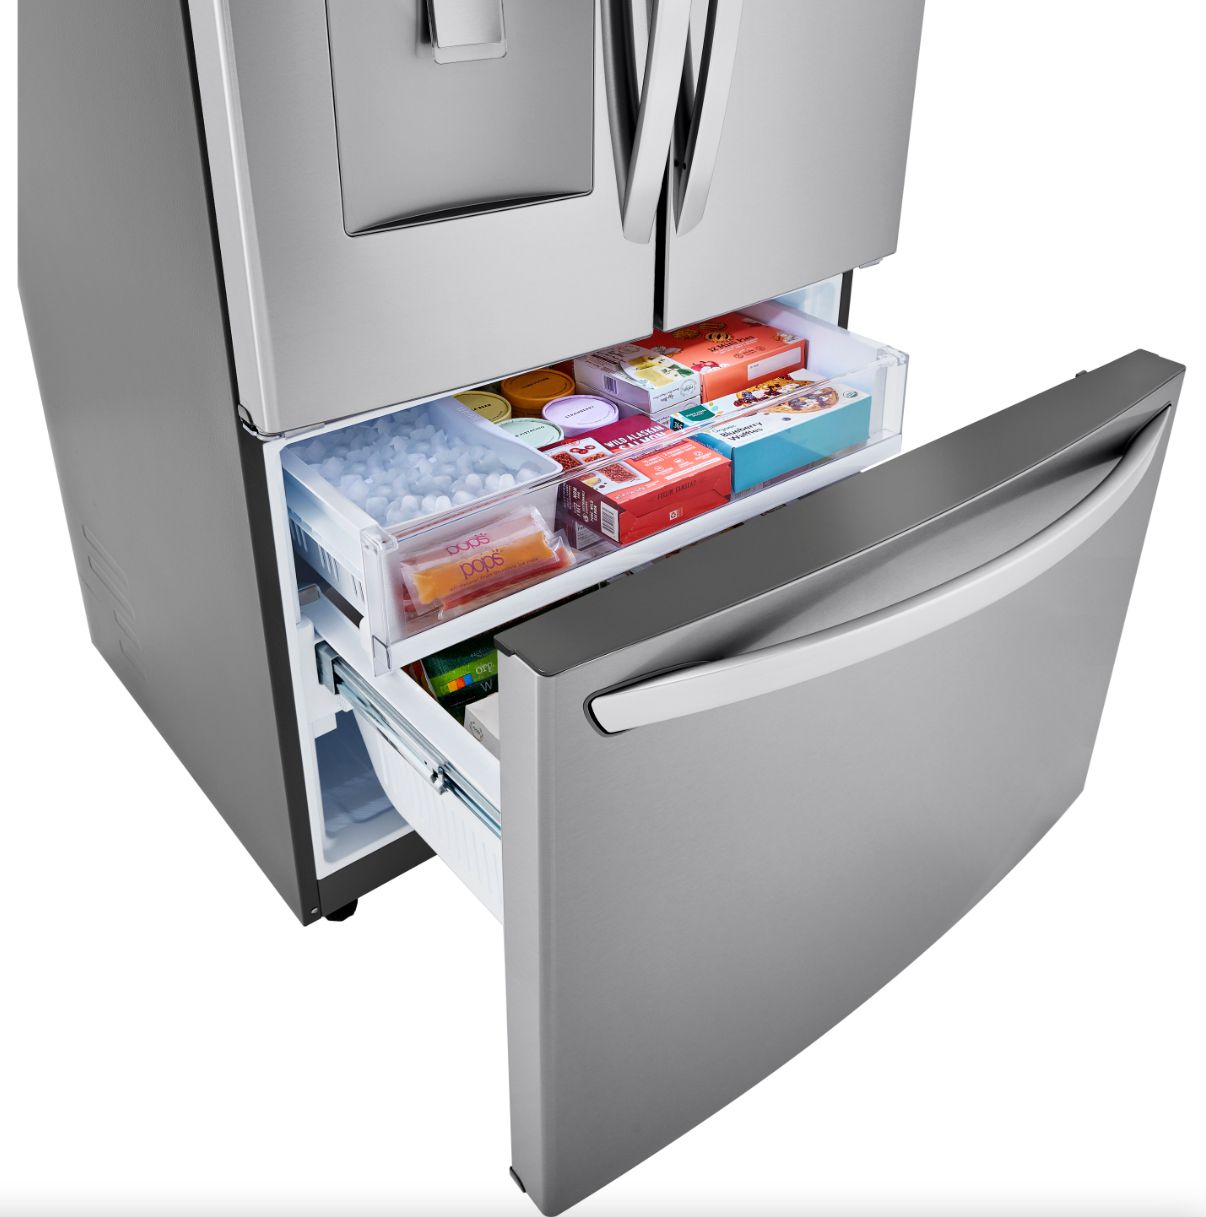 LG 36 Inch French Door Refrigerator with Slim Design Water Dispenser in Stainless Steel 29 Cu. Ft. (LRFWS2906V)